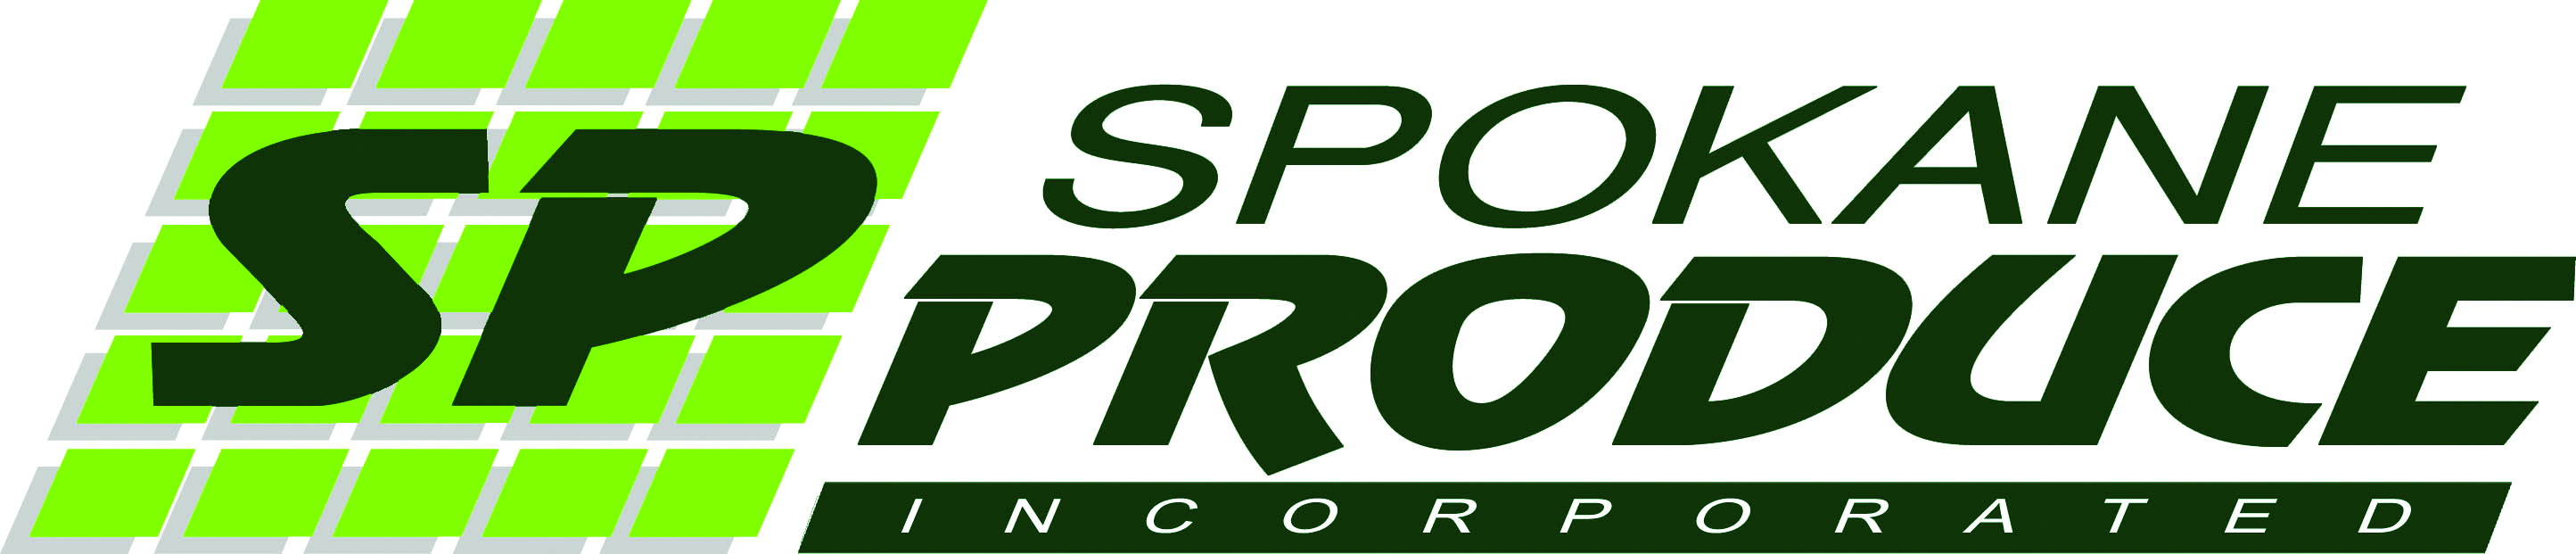 Spokane Produce Inc.